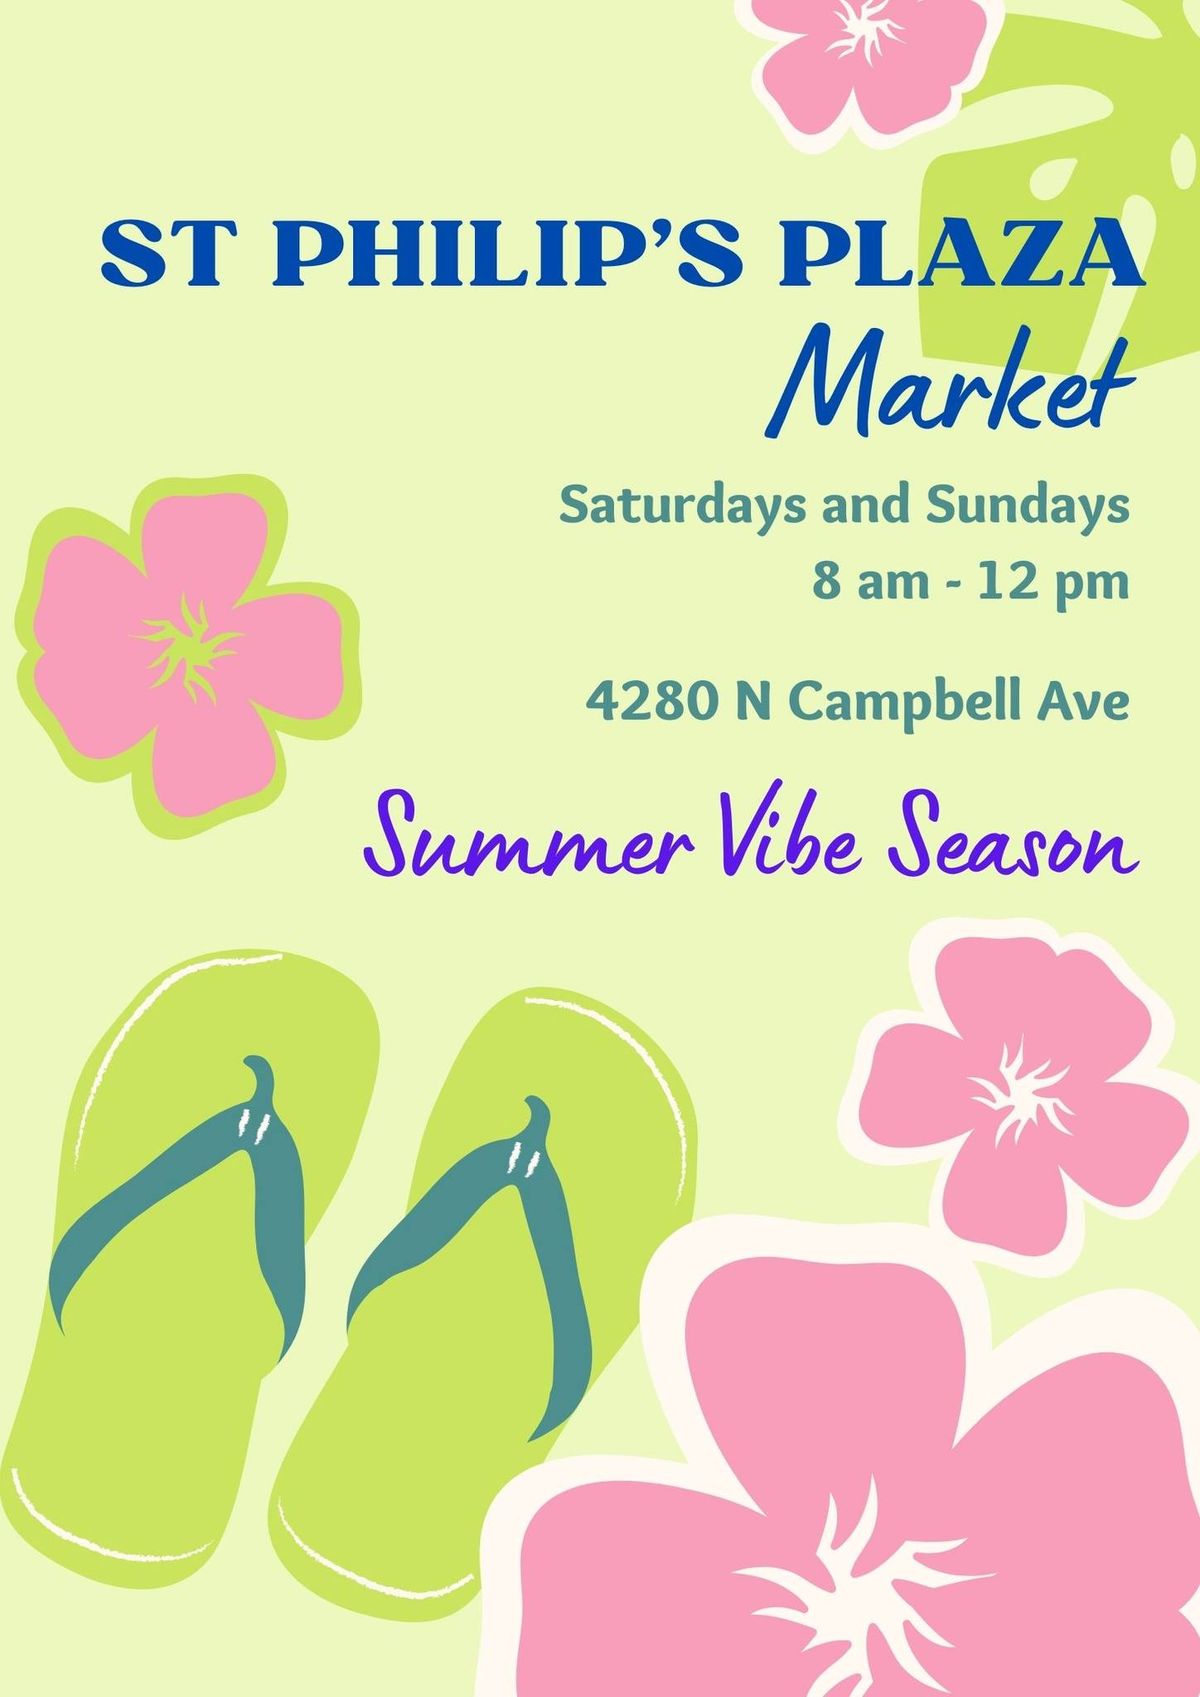 St Philip's Plaza Market Summer Vibe Season